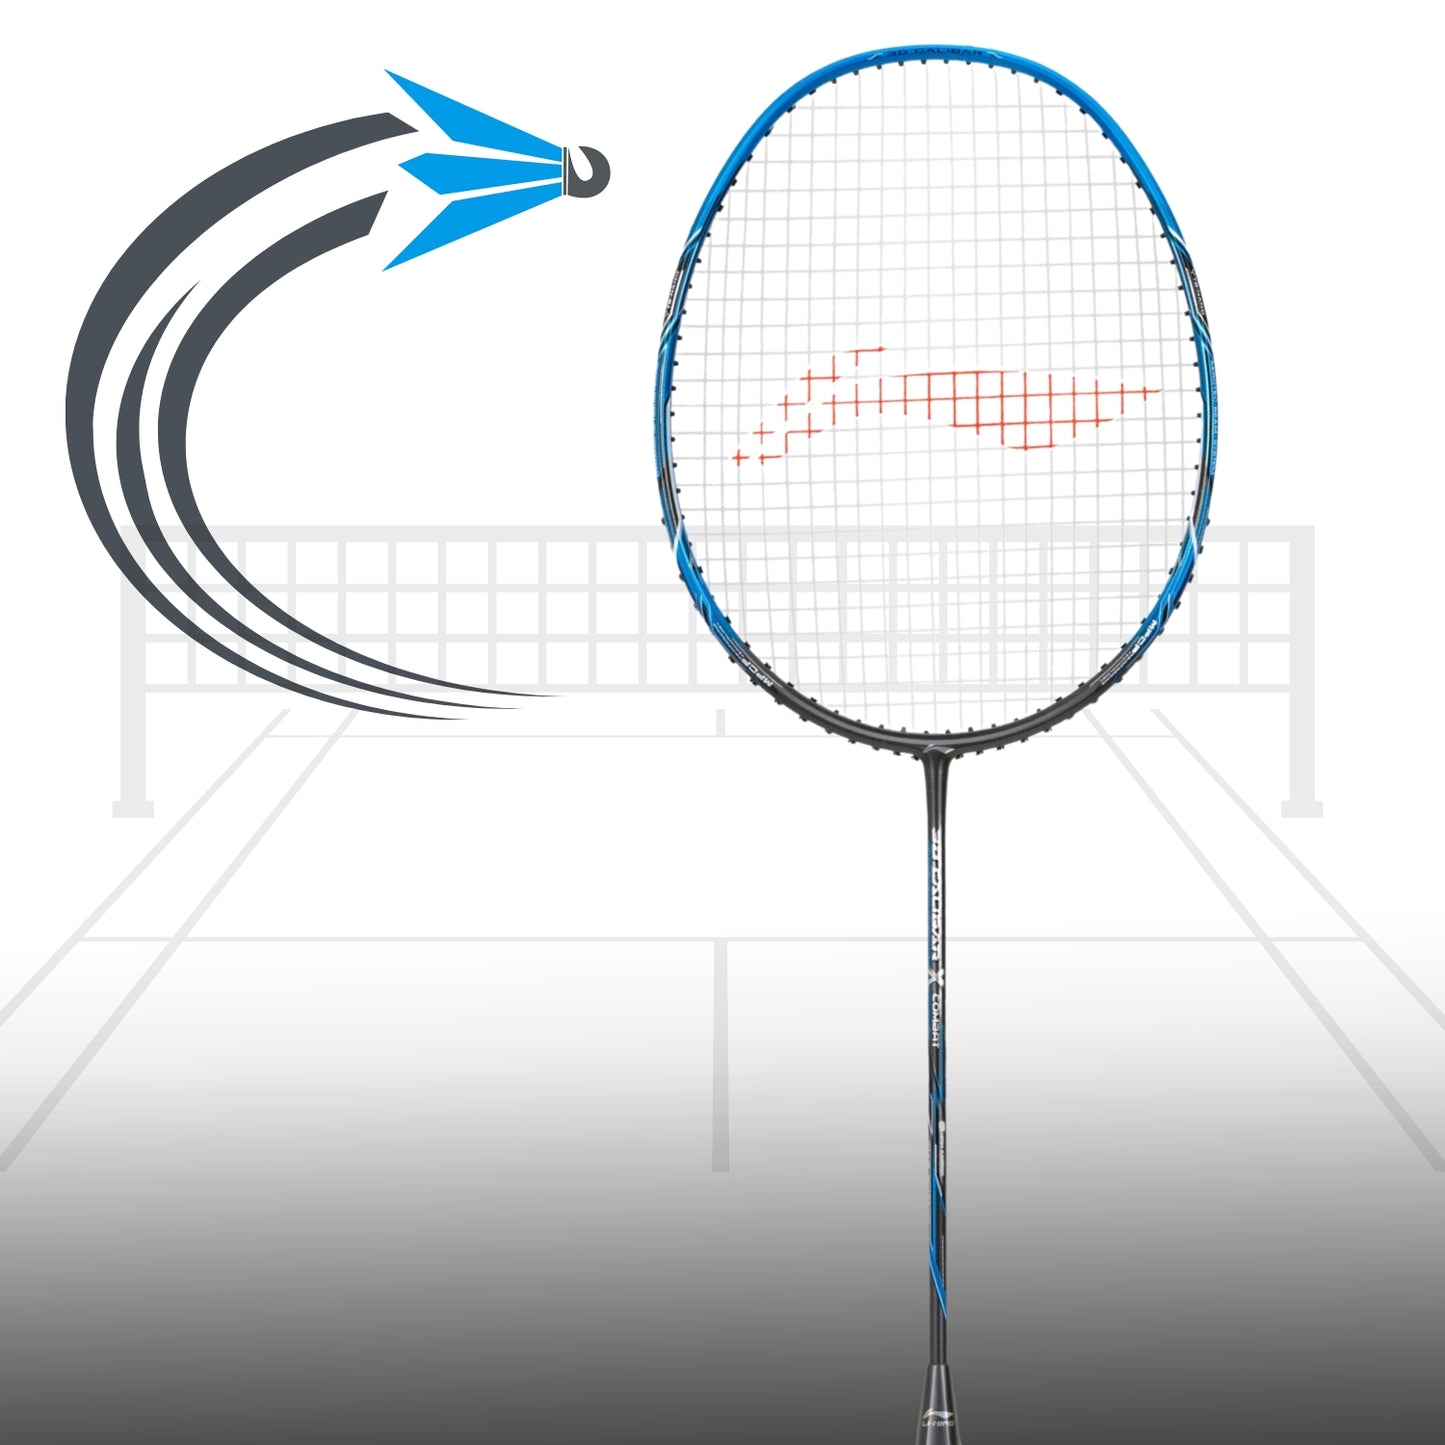 Li-Ning 3D Calibar X Combat Badminton Racquet - Best Price online Prokicksports.com